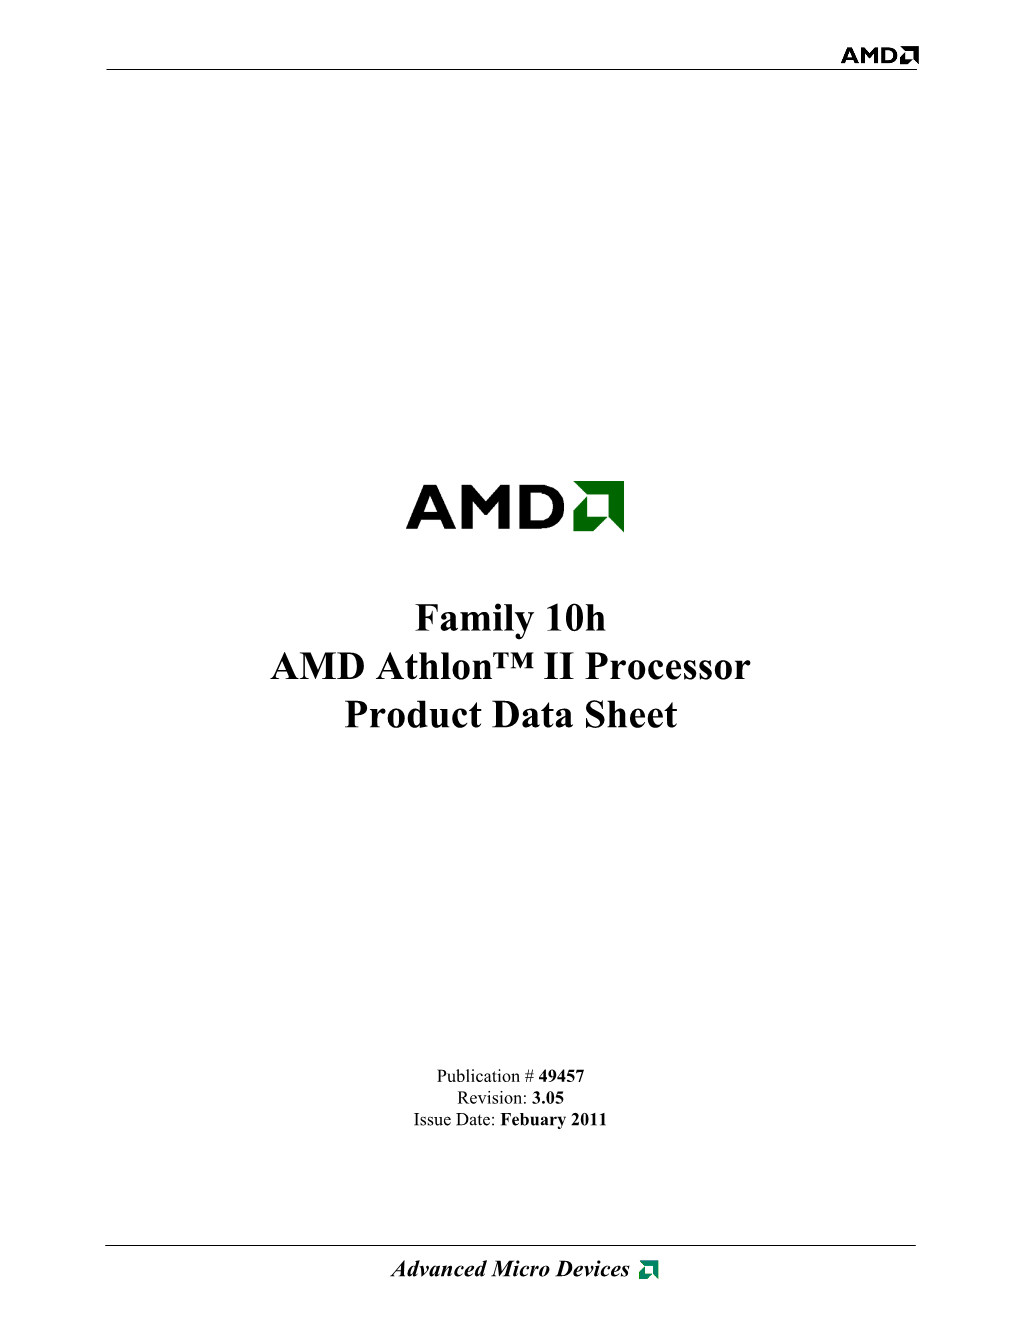 Family 10H AMD Athlon II Processor Product Data Sheet